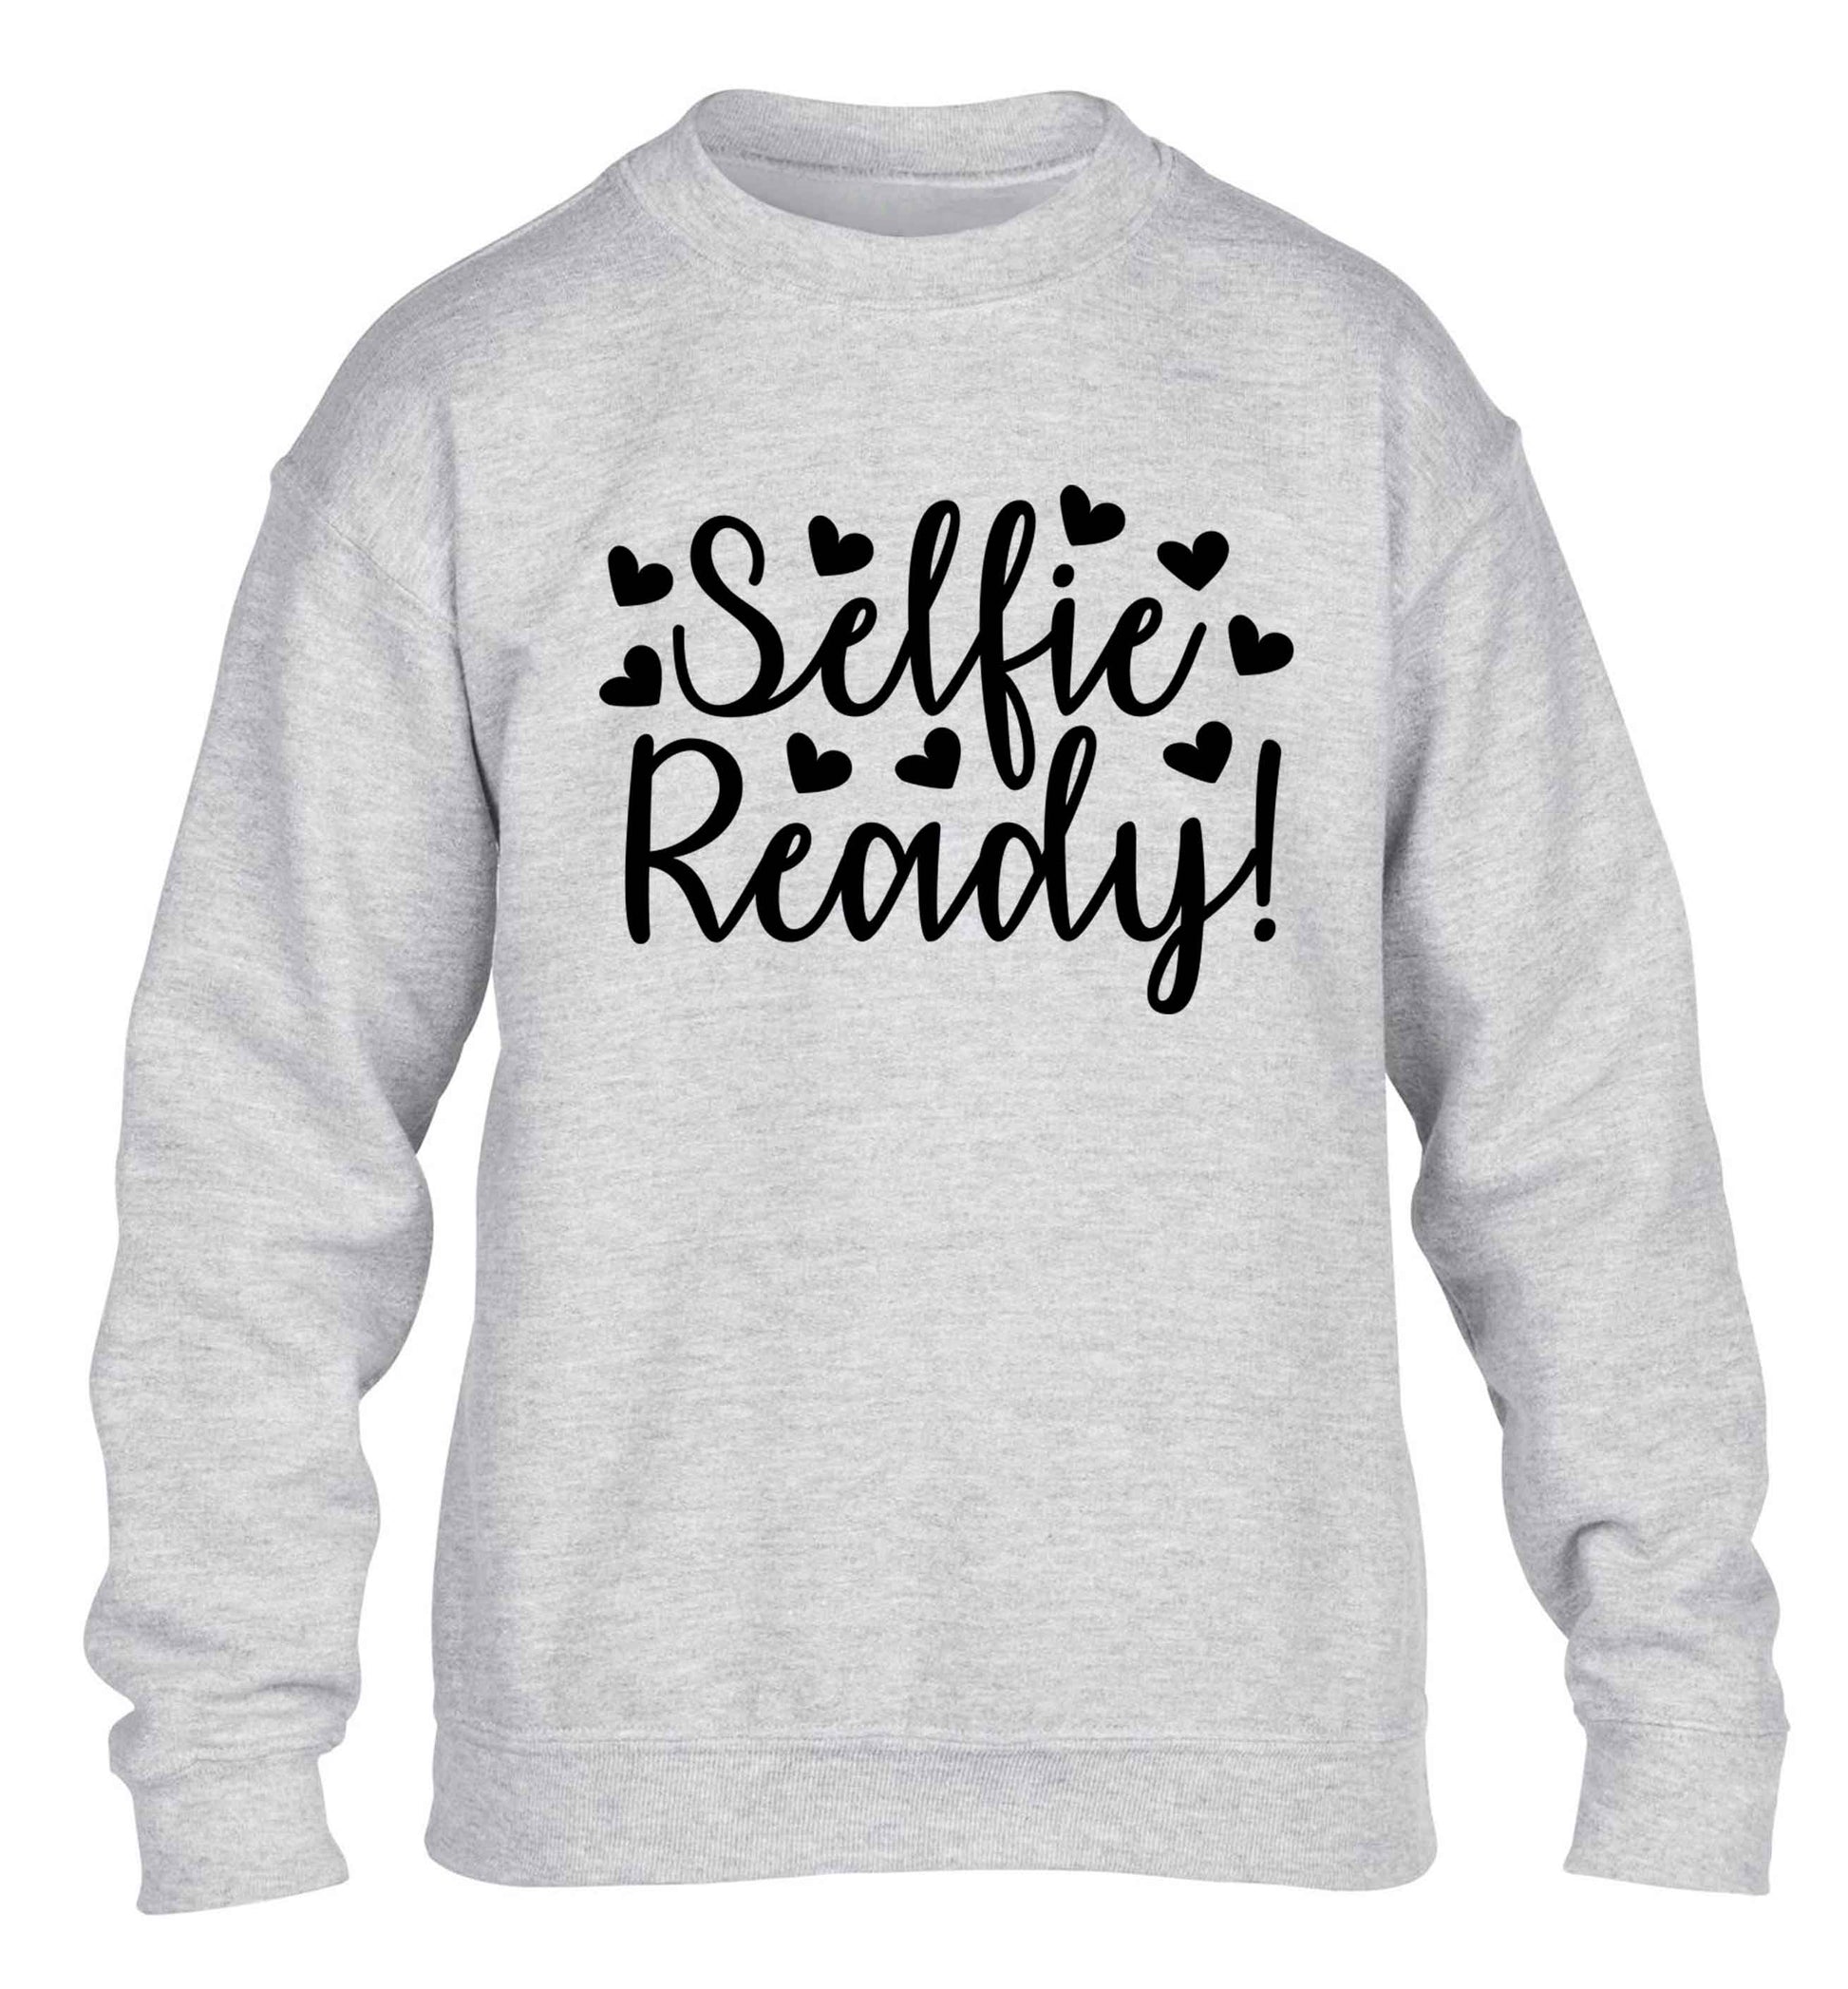 Selfie ready children's grey sweater 12-13 Years